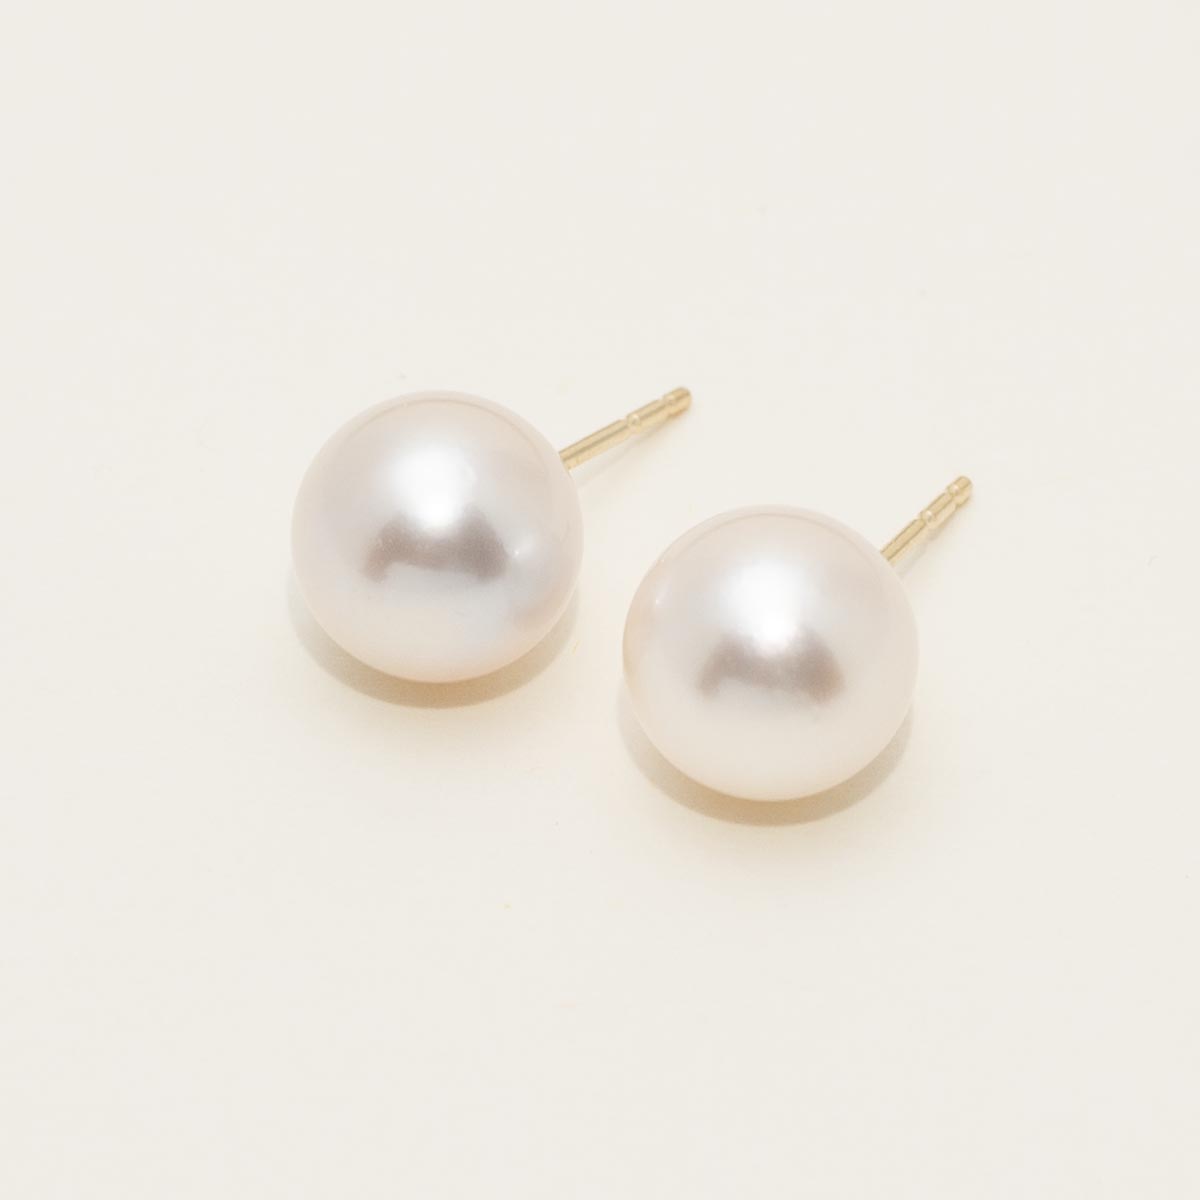 Mastoloni Cultured Akoya Pearl Stud Earrings in 14kt Yellow Gold (8-8.5mm pearls)